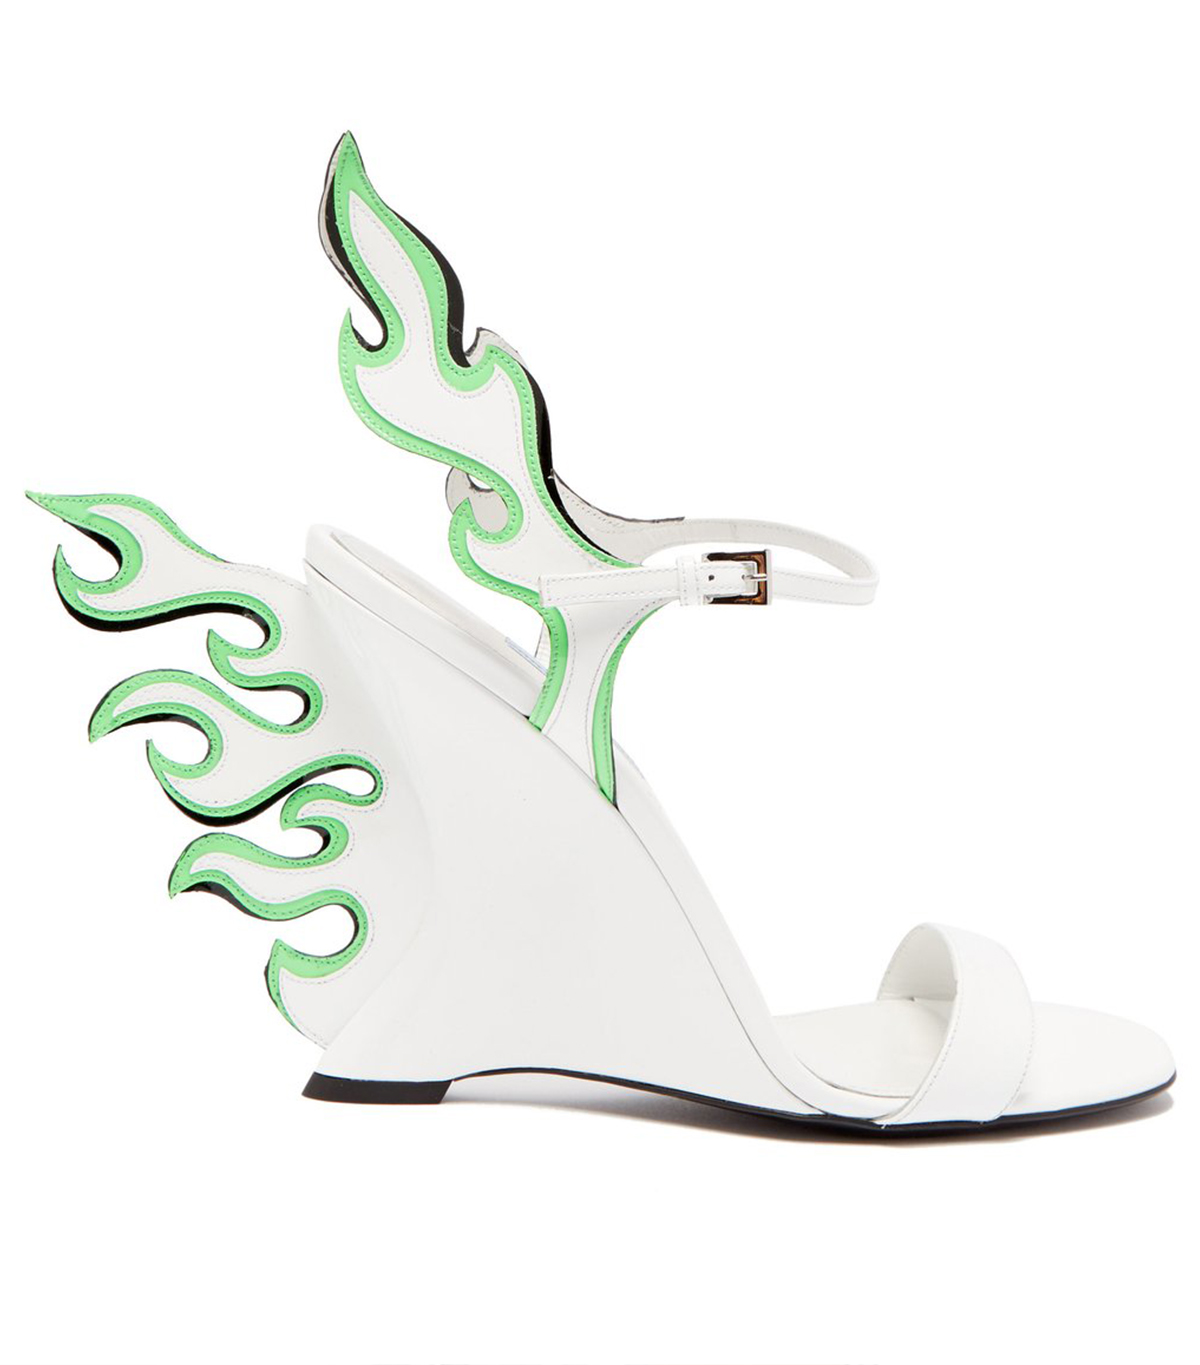 Prada's Flame Heels Are Lighting Up the 